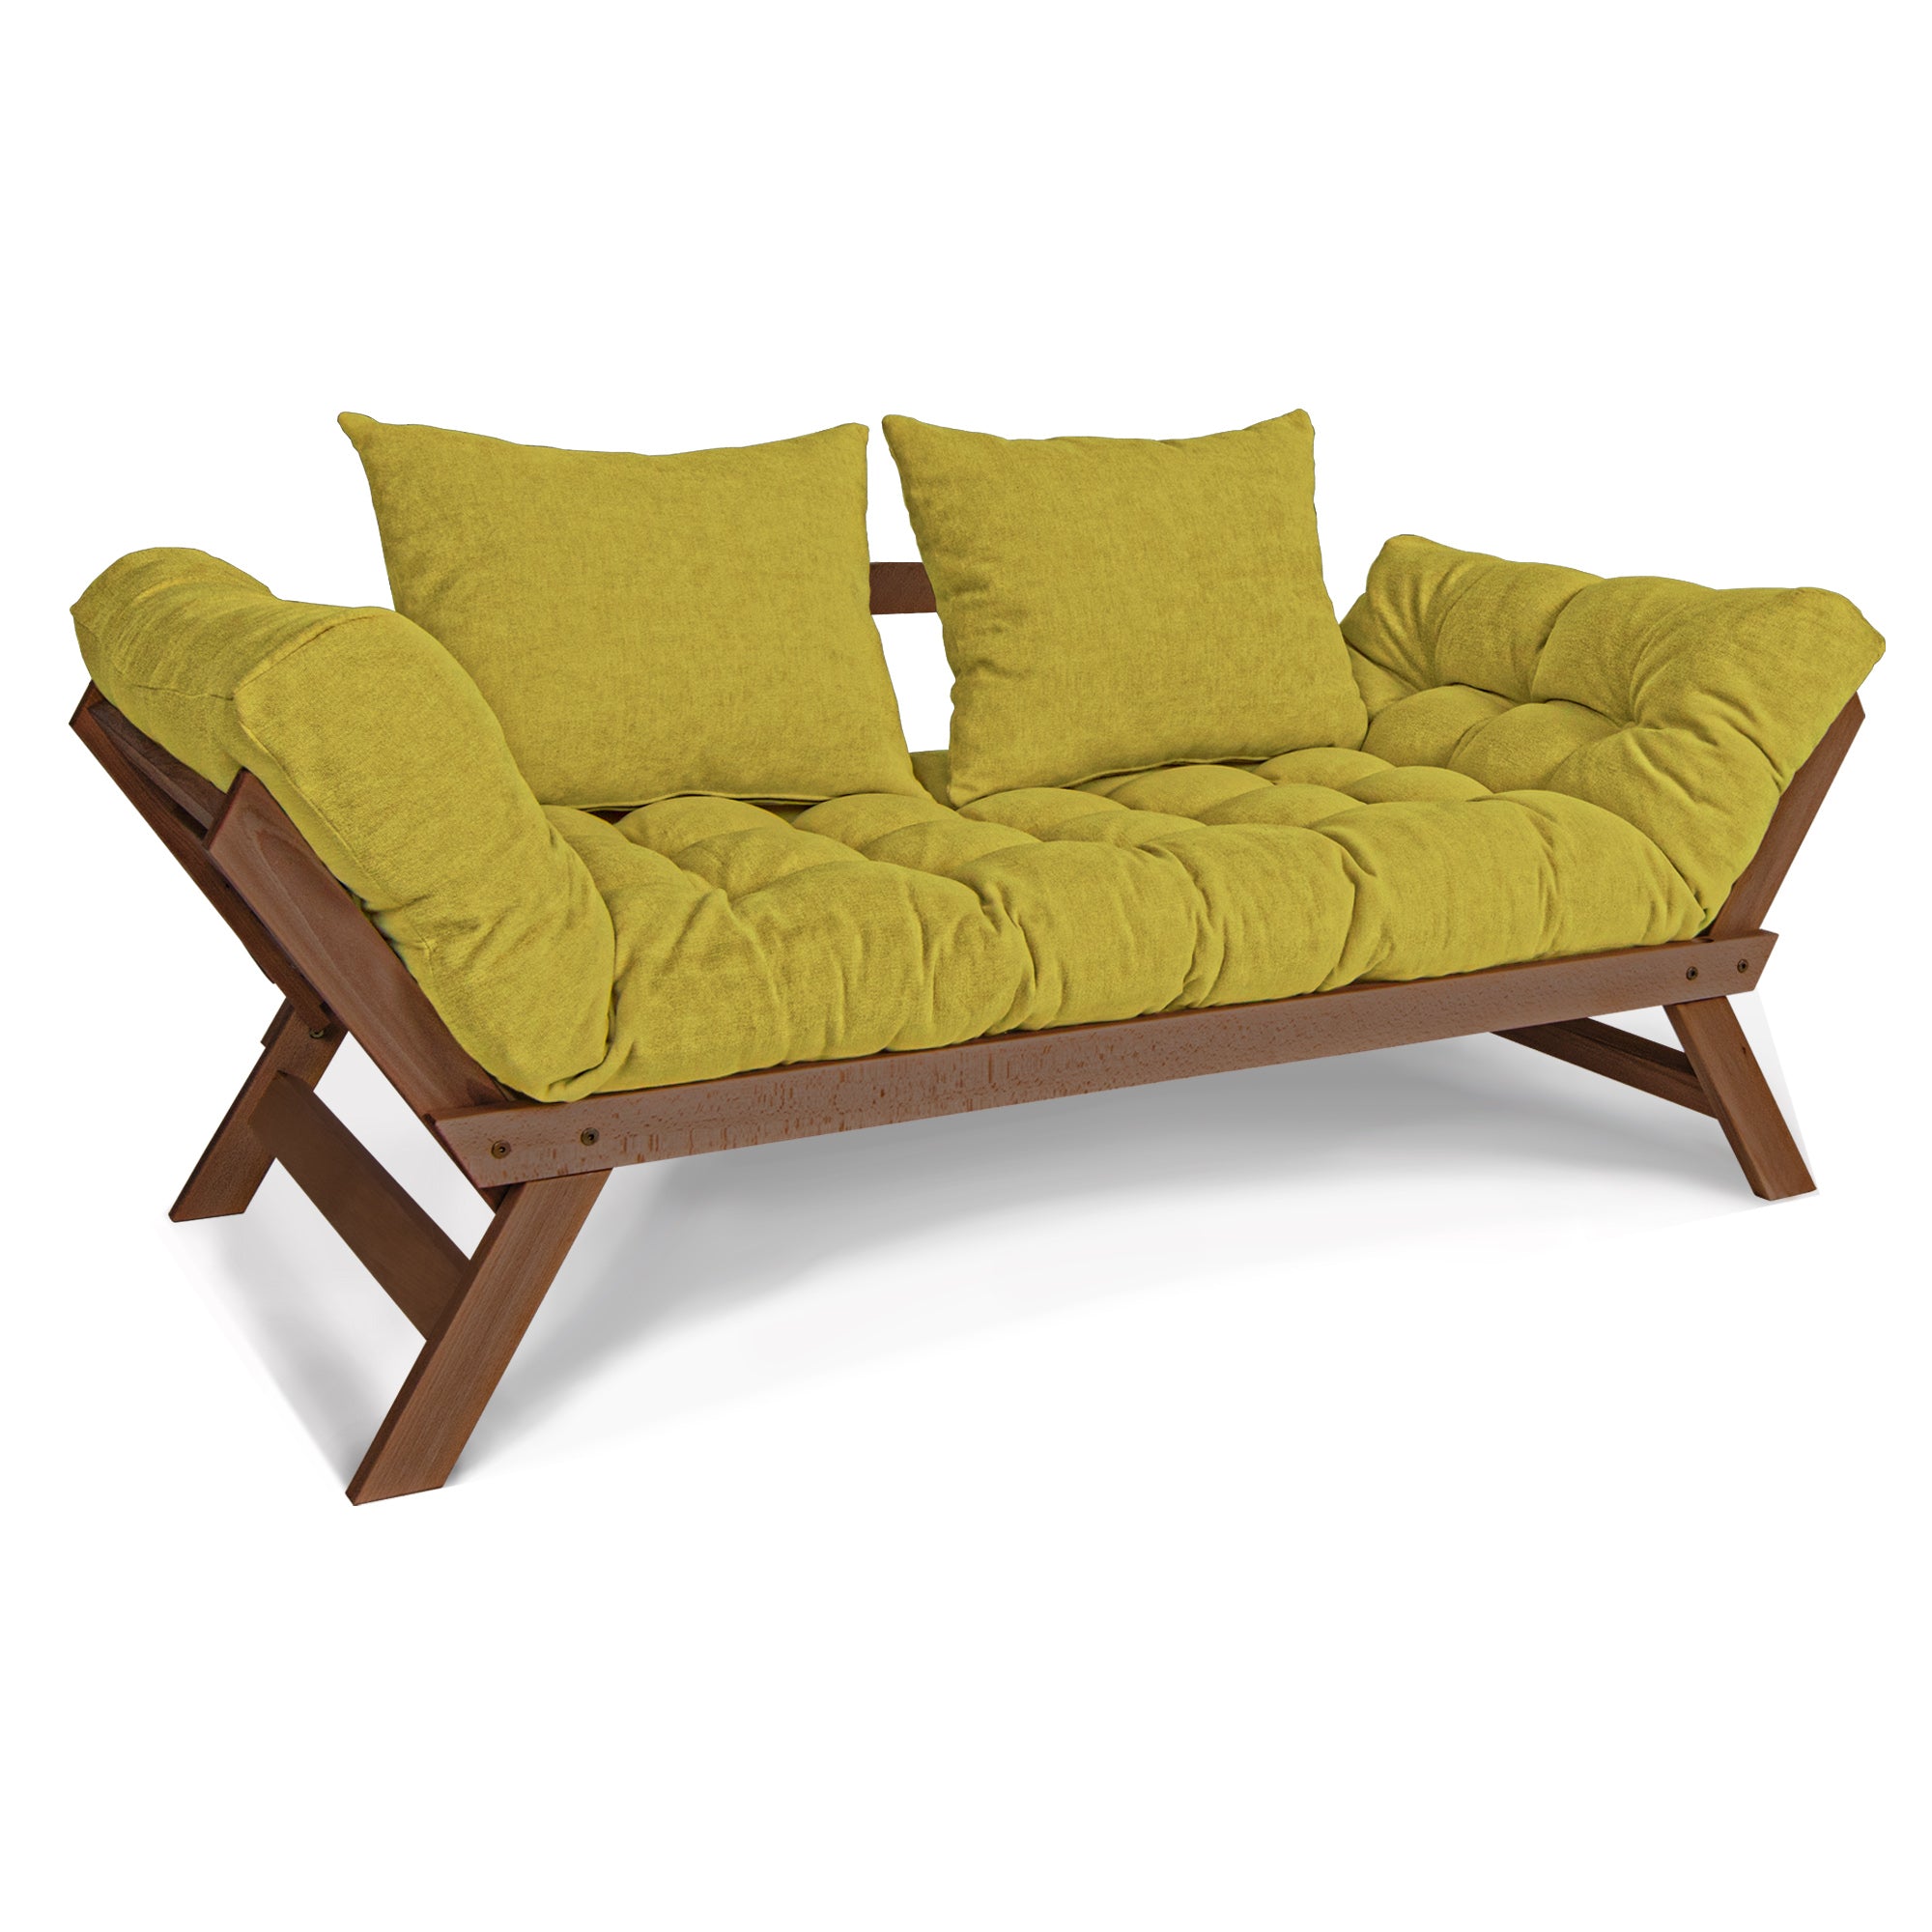 ALLEGRO Folding Sofa Bed, Beech Wood Frame, Walnut Colour upholstery green